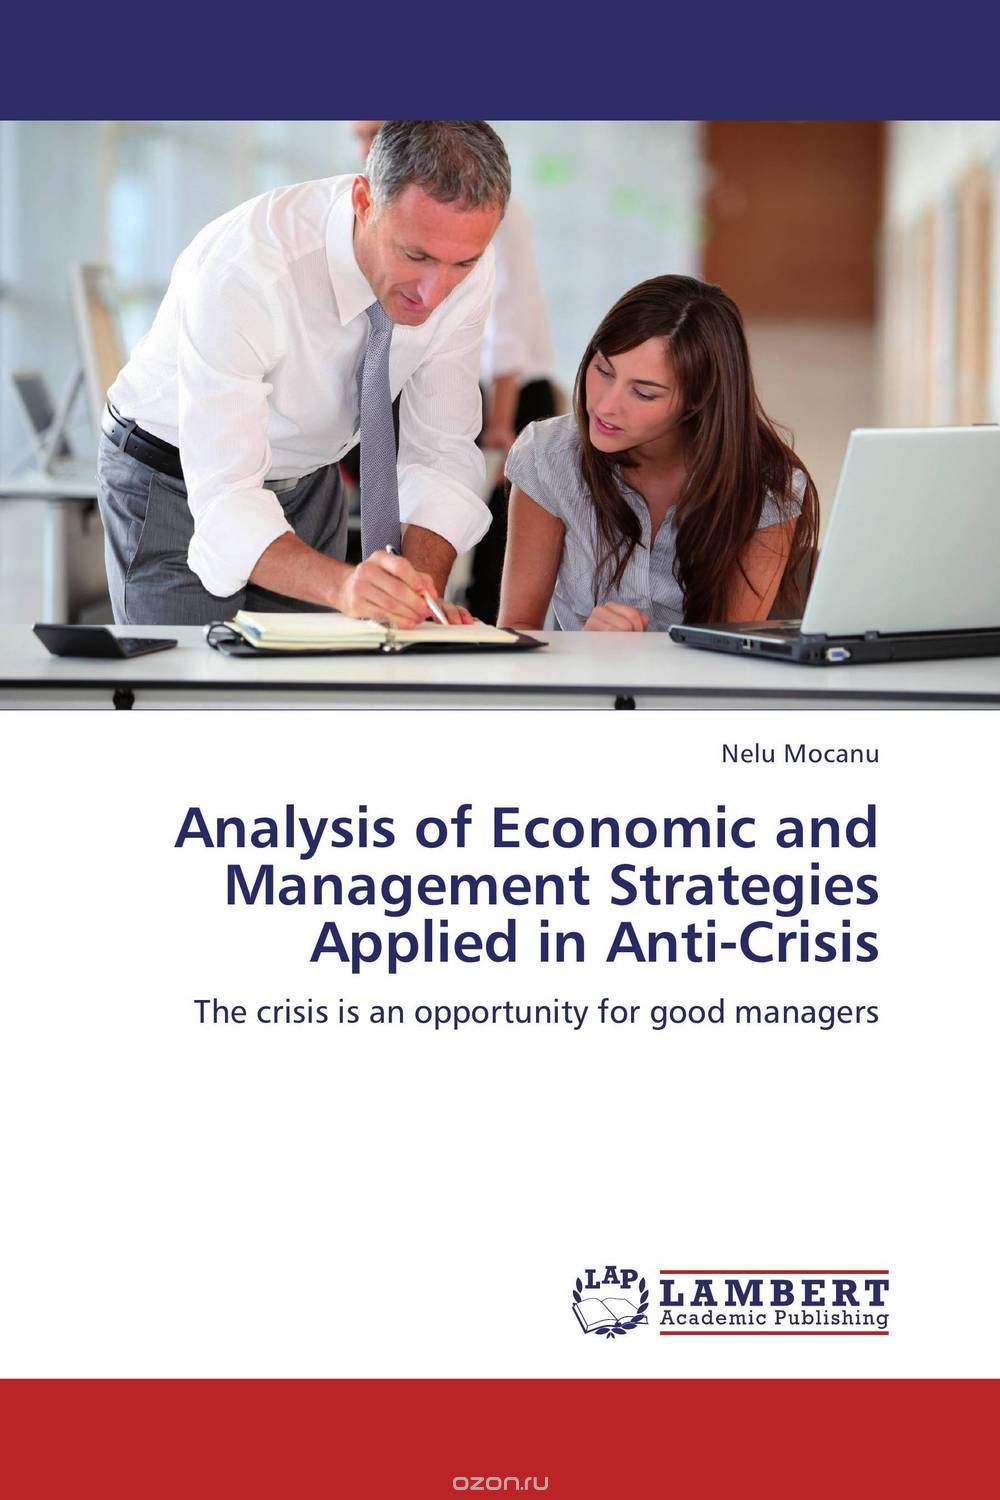 Скачать книгу "Analysis of Economic and Management Strategies Applied in Anti-Crisis"